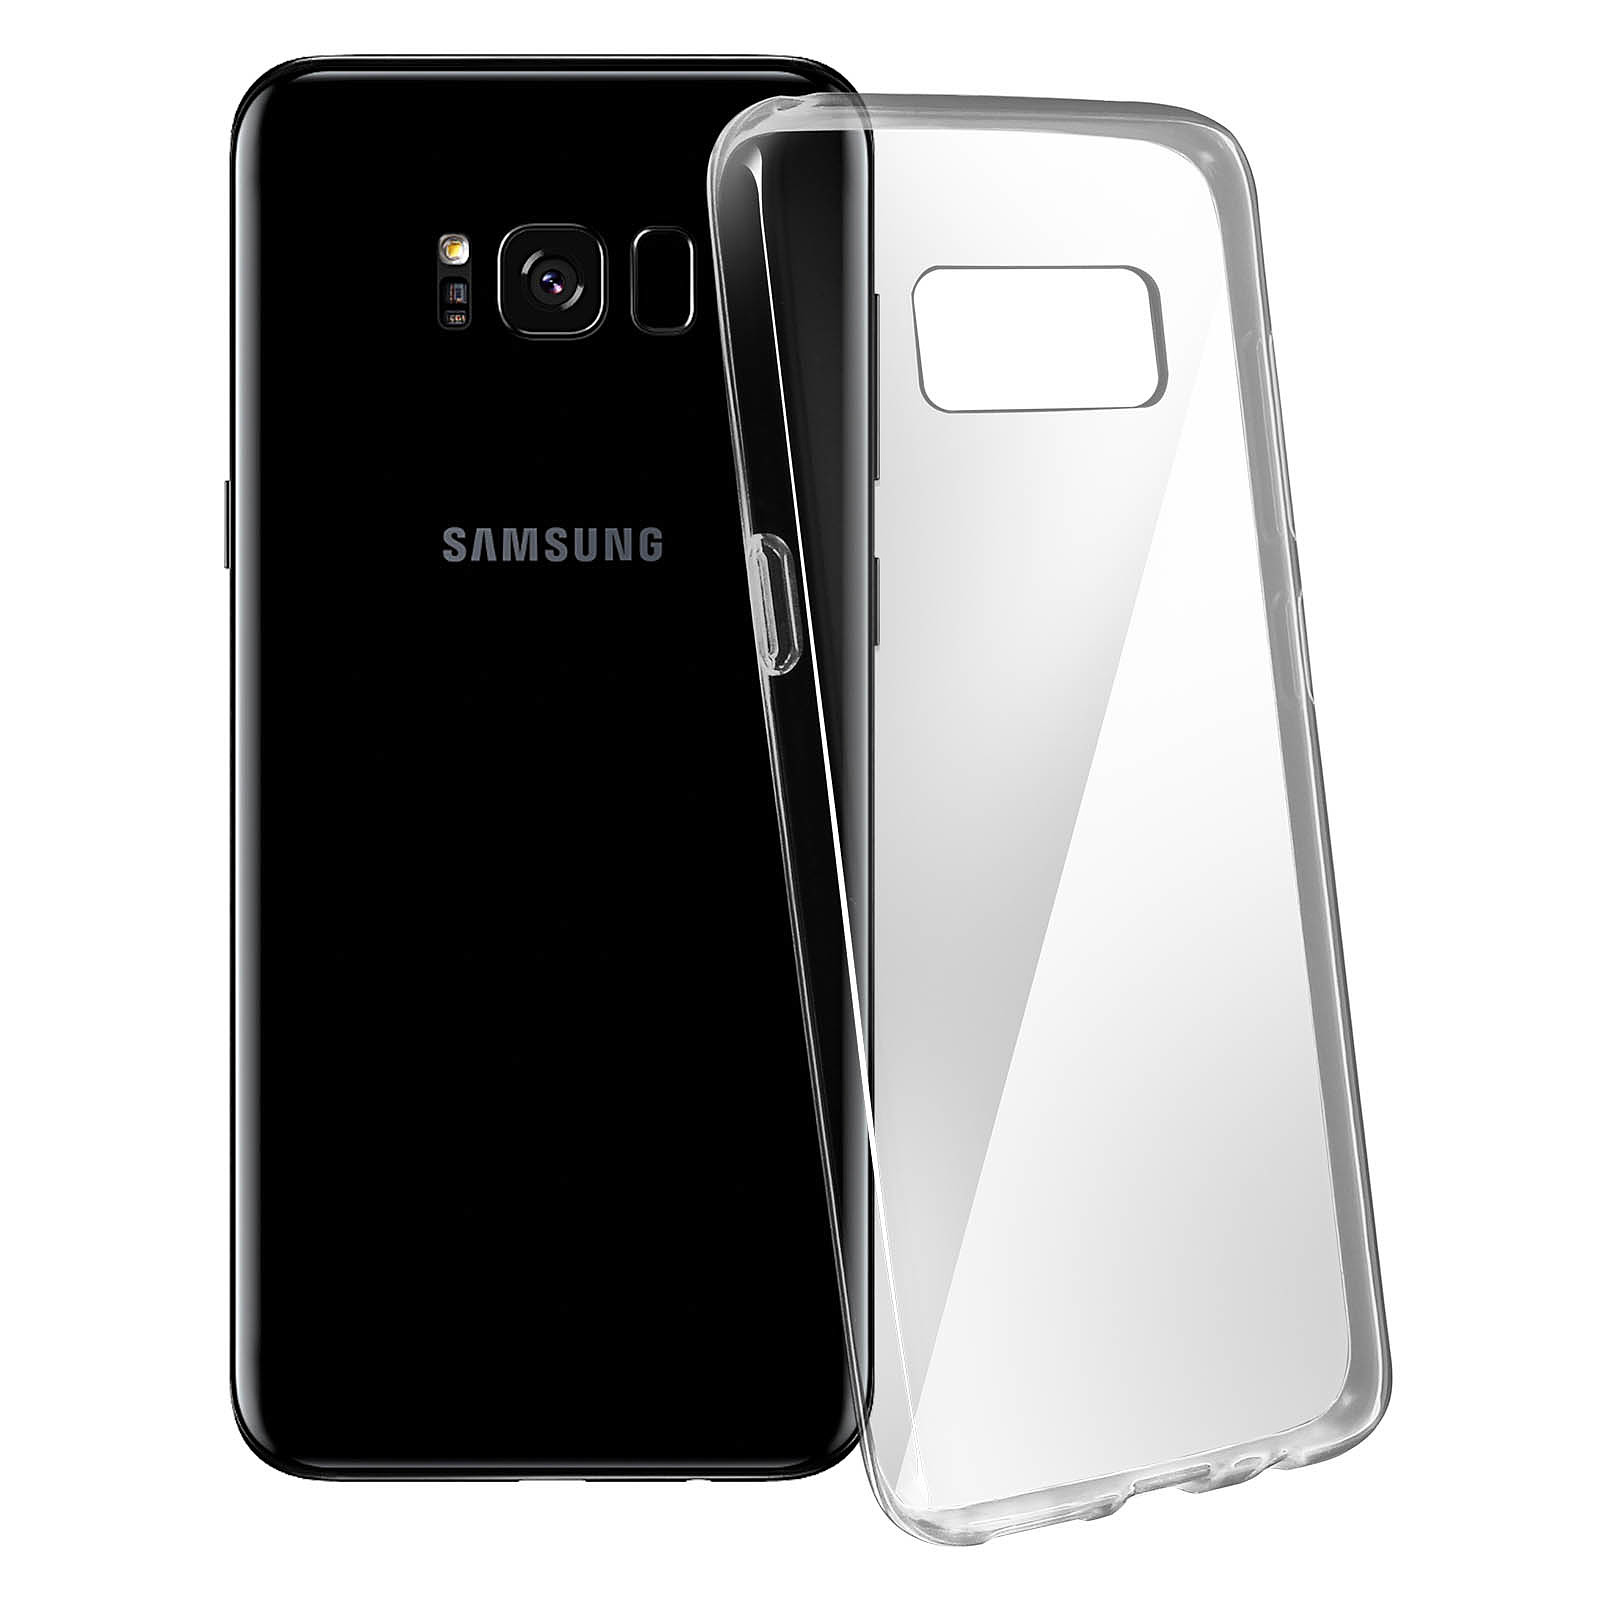 Avizar Coque Galaxy S8 Protection transparente silicone gel souple antirayures - Coque telephone Avizar